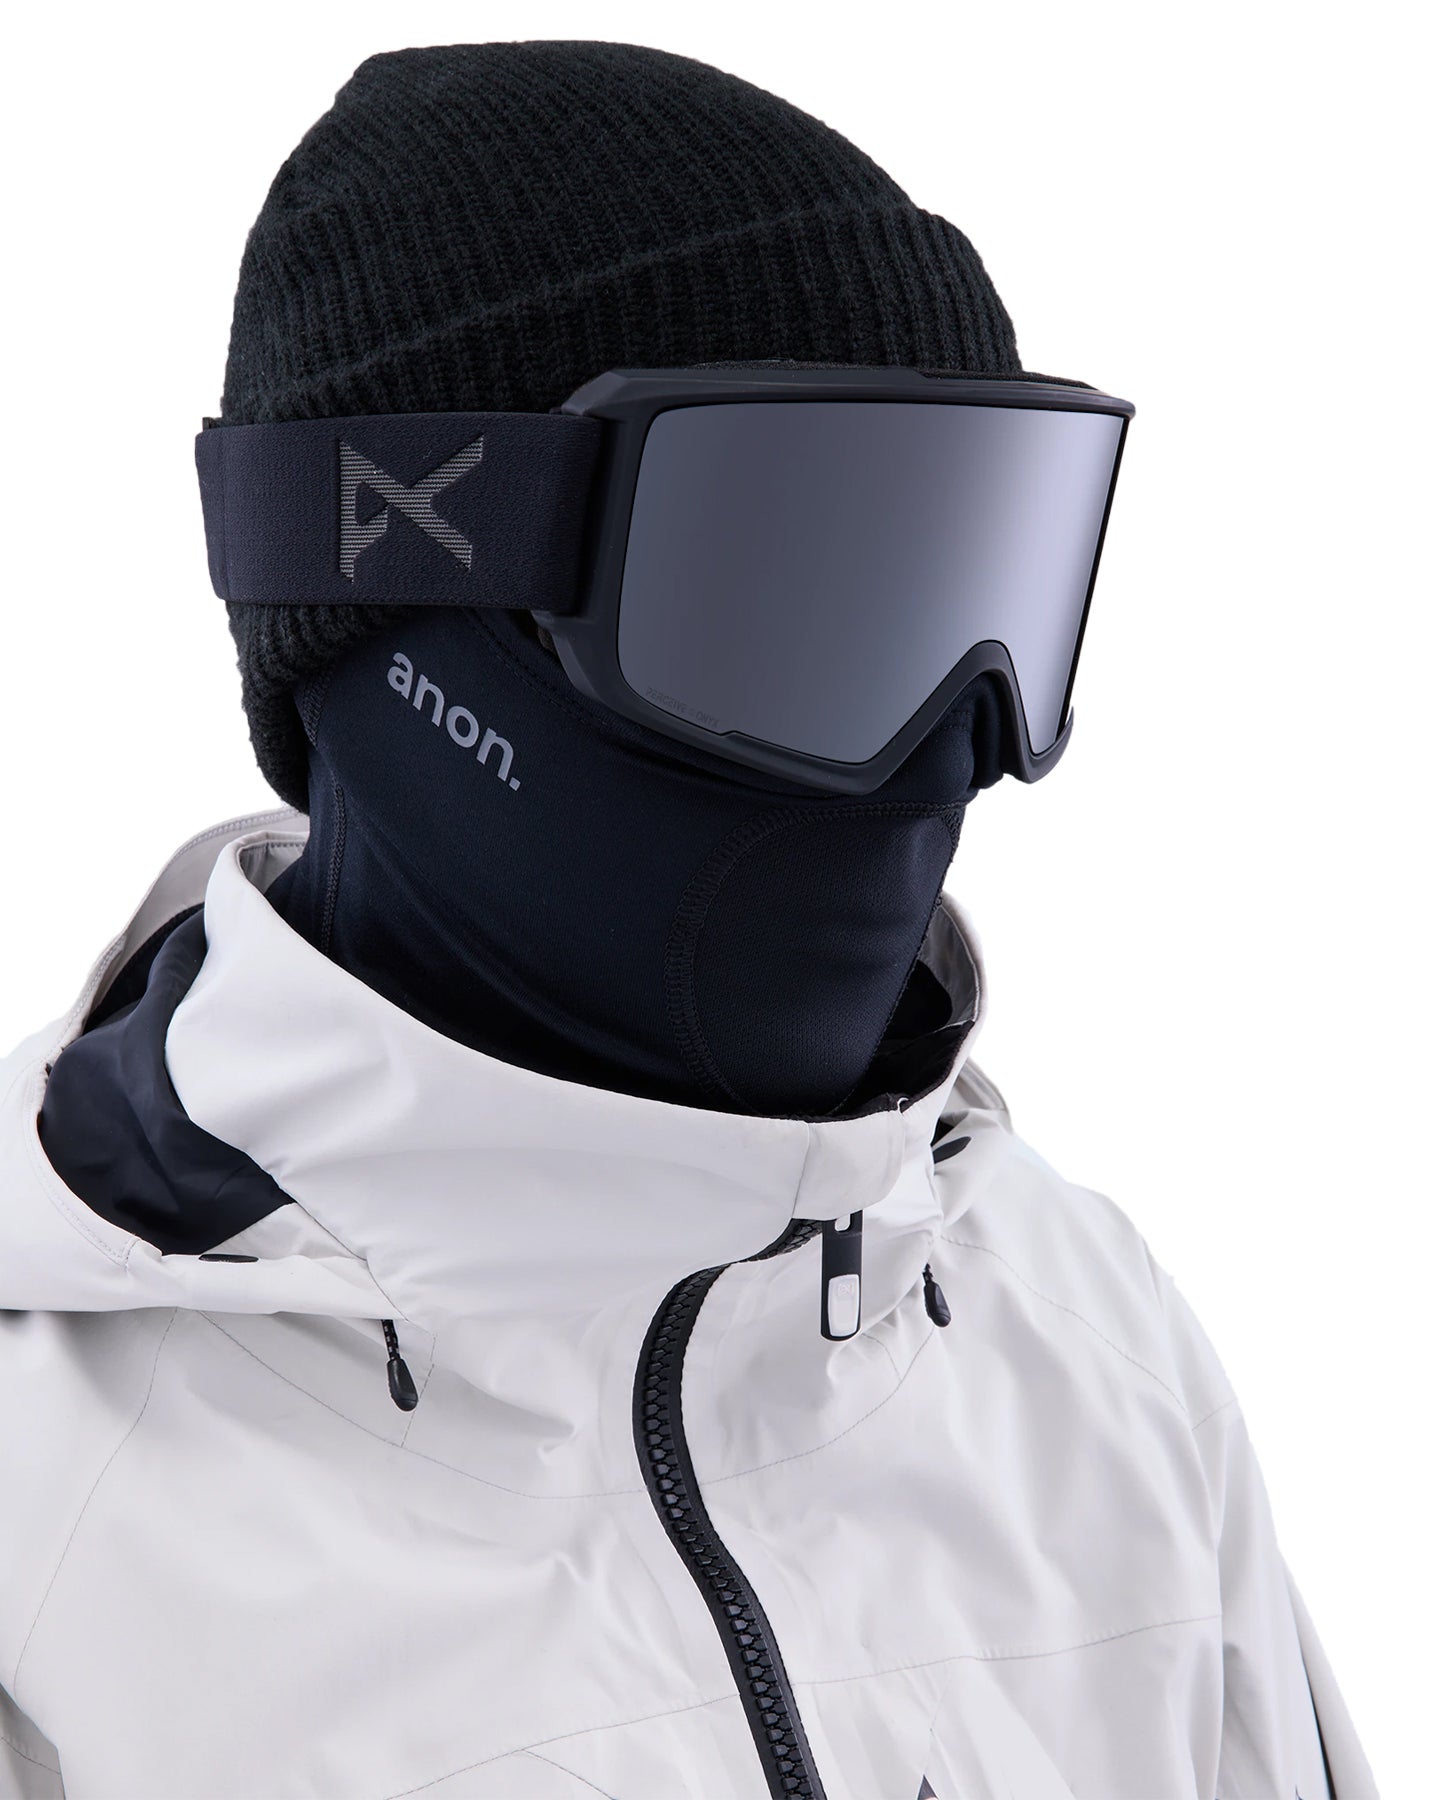 Anon M3 Snow Goggles + Bonus Lens + Mfi® Face Mask - Smoke/Perceive Sunny Onyx Lens Men's Snow Goggles - Trojan Wake Ski Snow